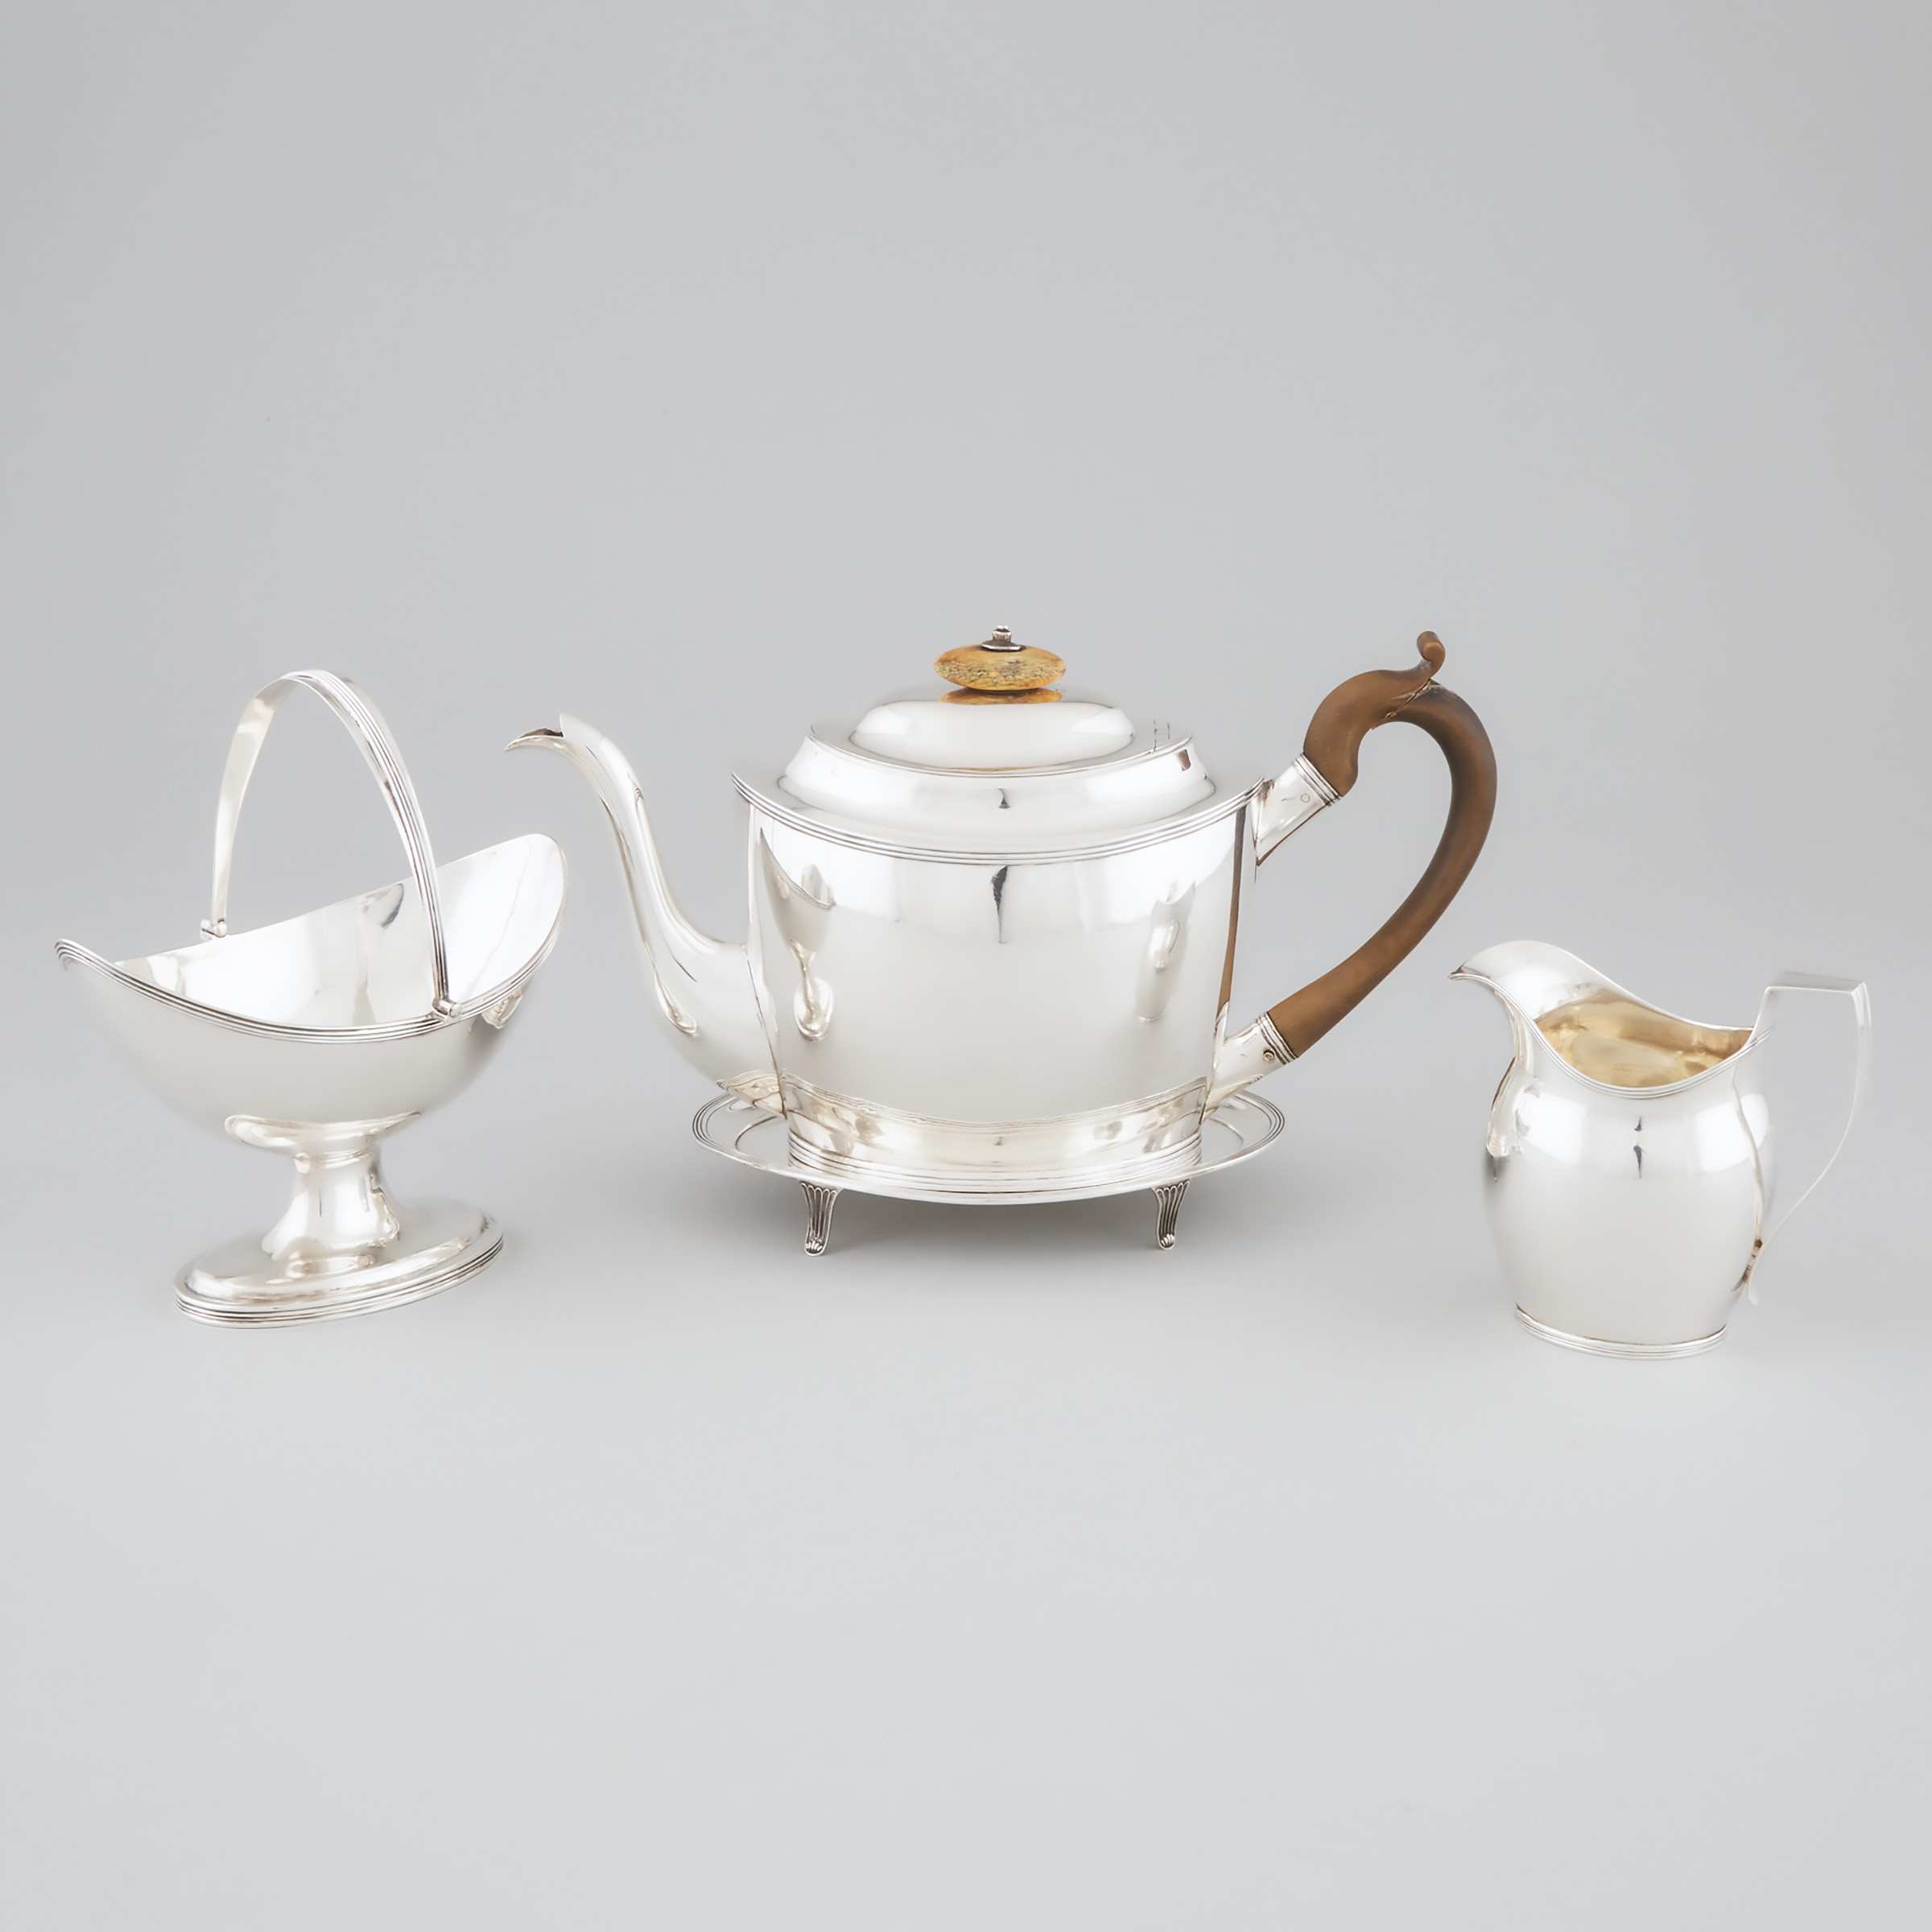 George III Silver Tea Service, Peter, Ann & William Bateman, London 1800-02